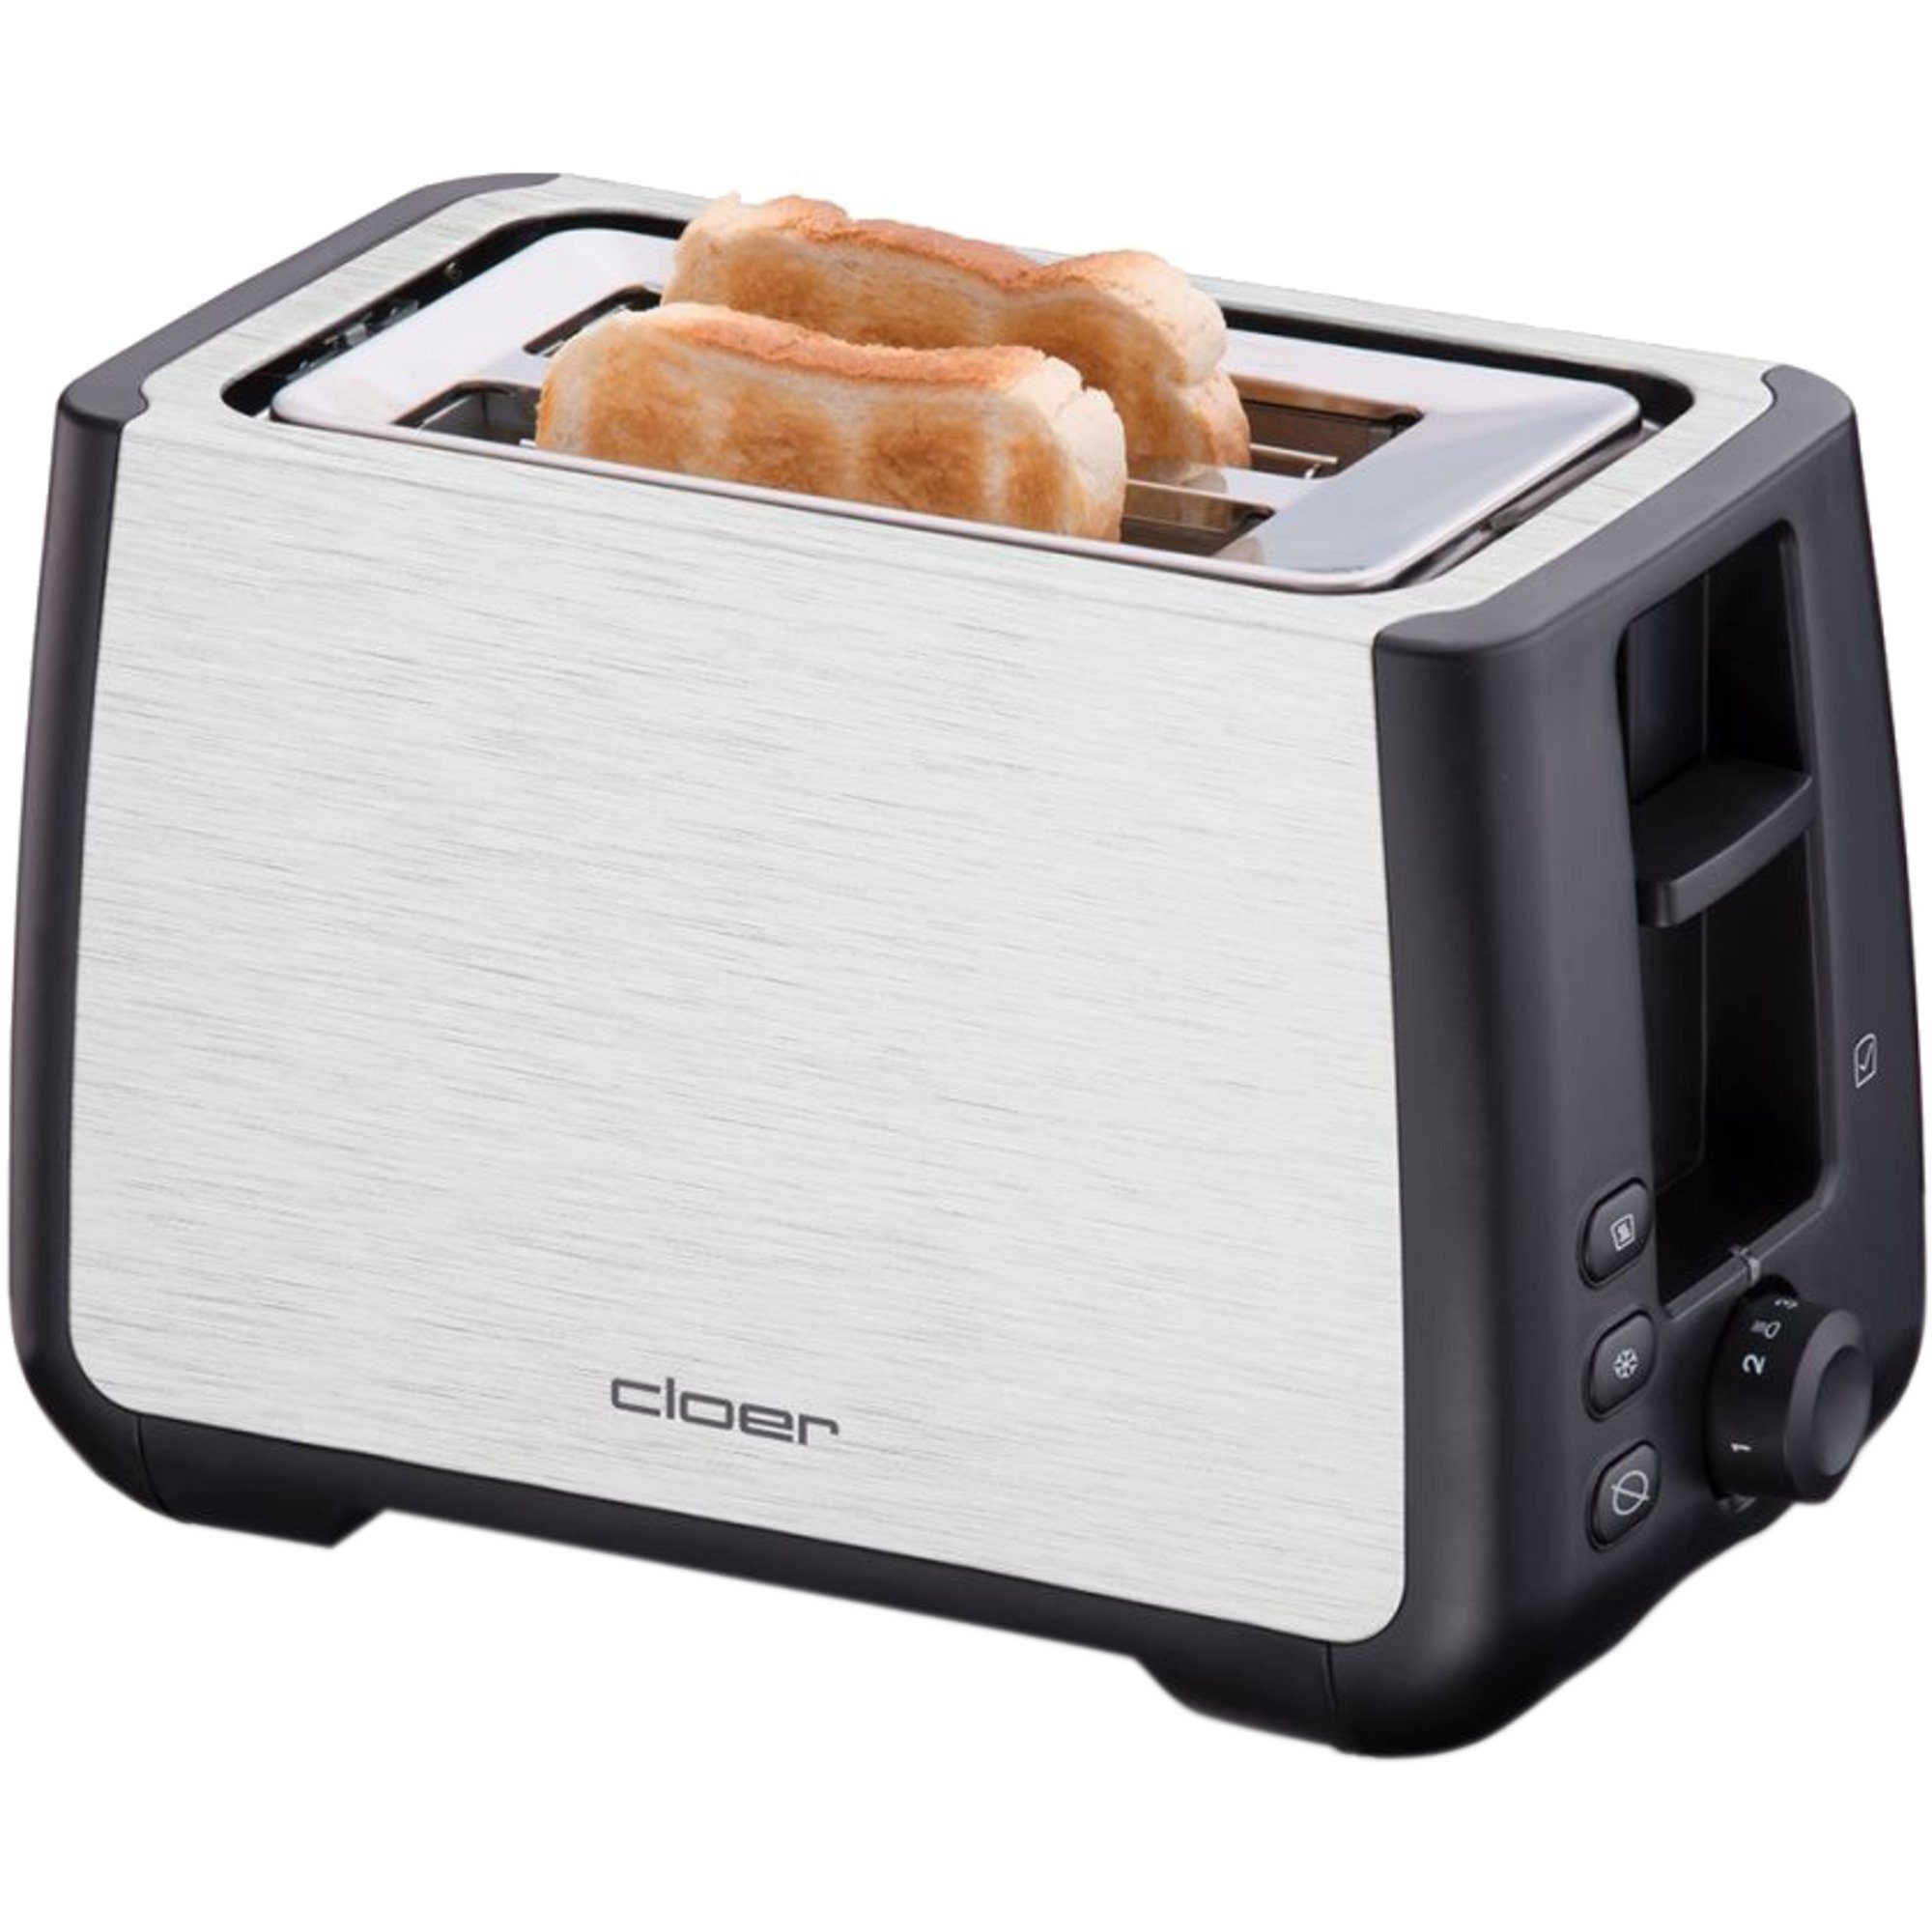 Cloer Toaster King-Size-Toaster 3569